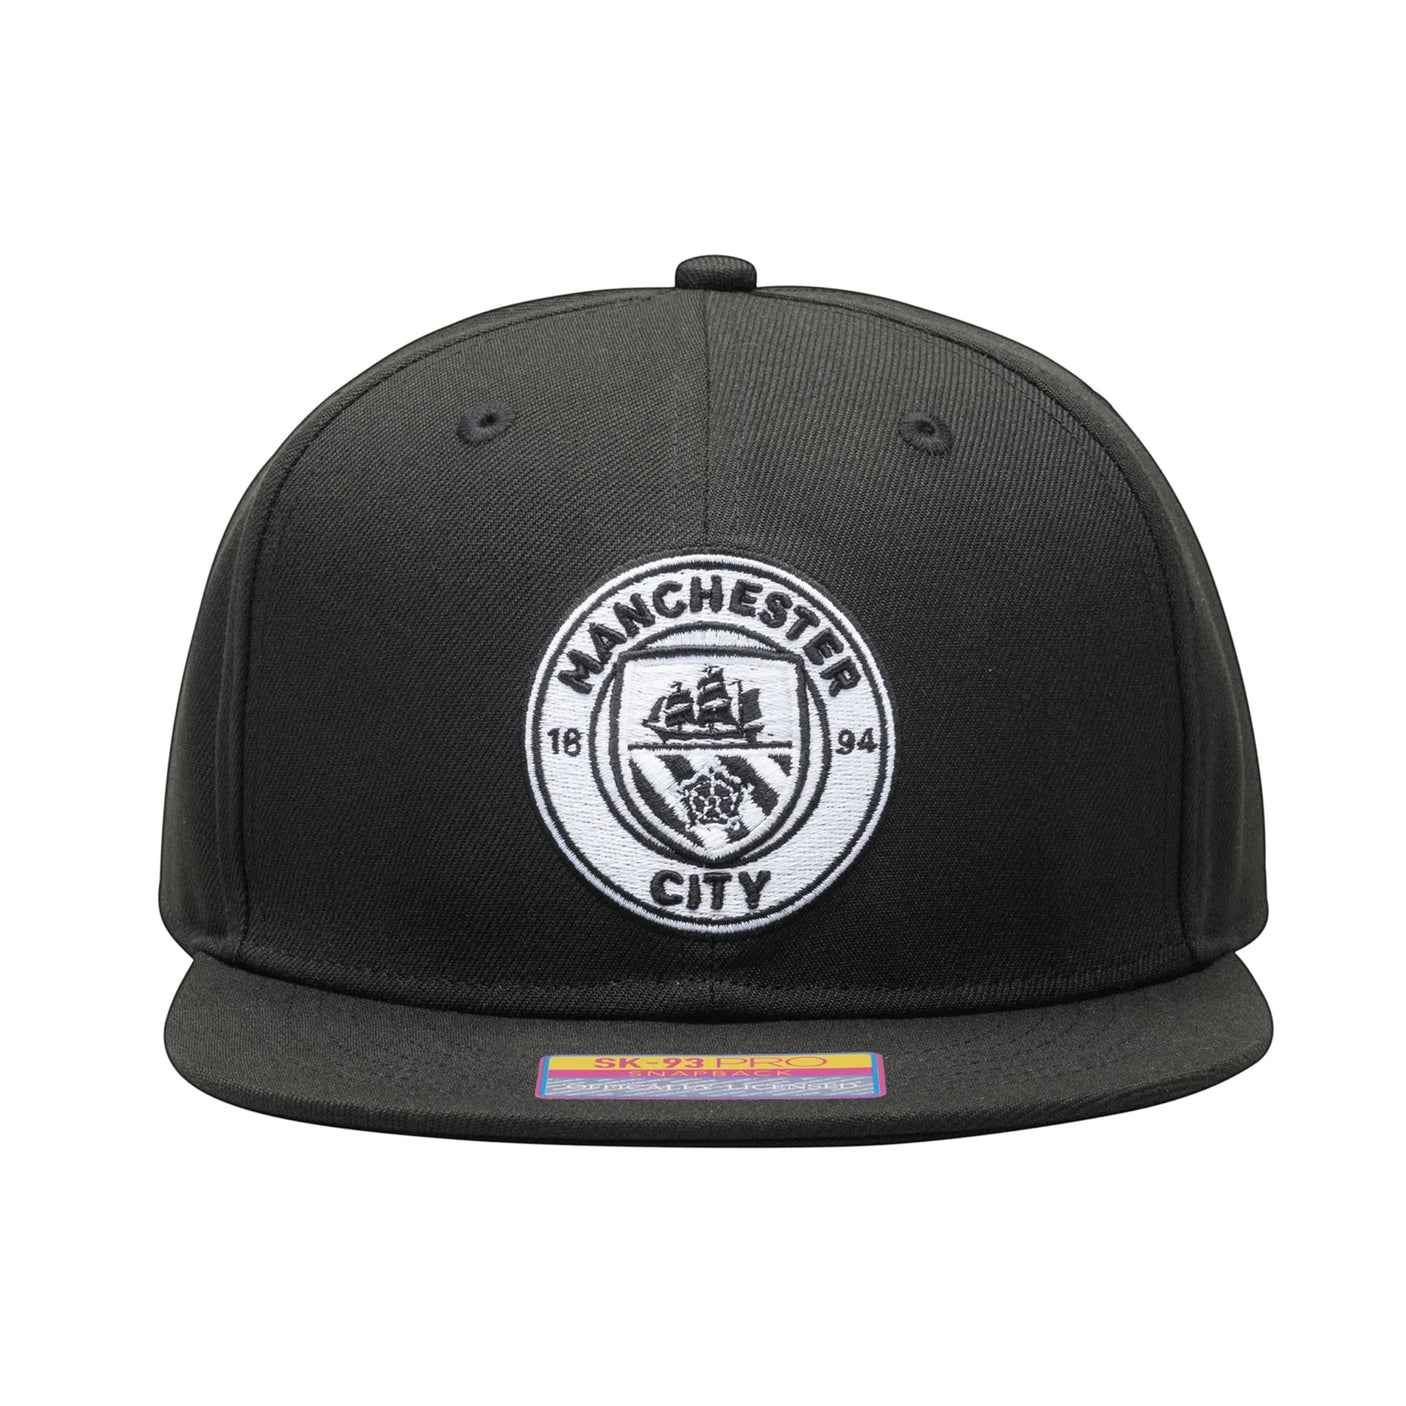 Fan Ink Manchester City Hit Snap Back Hat Black/White Front